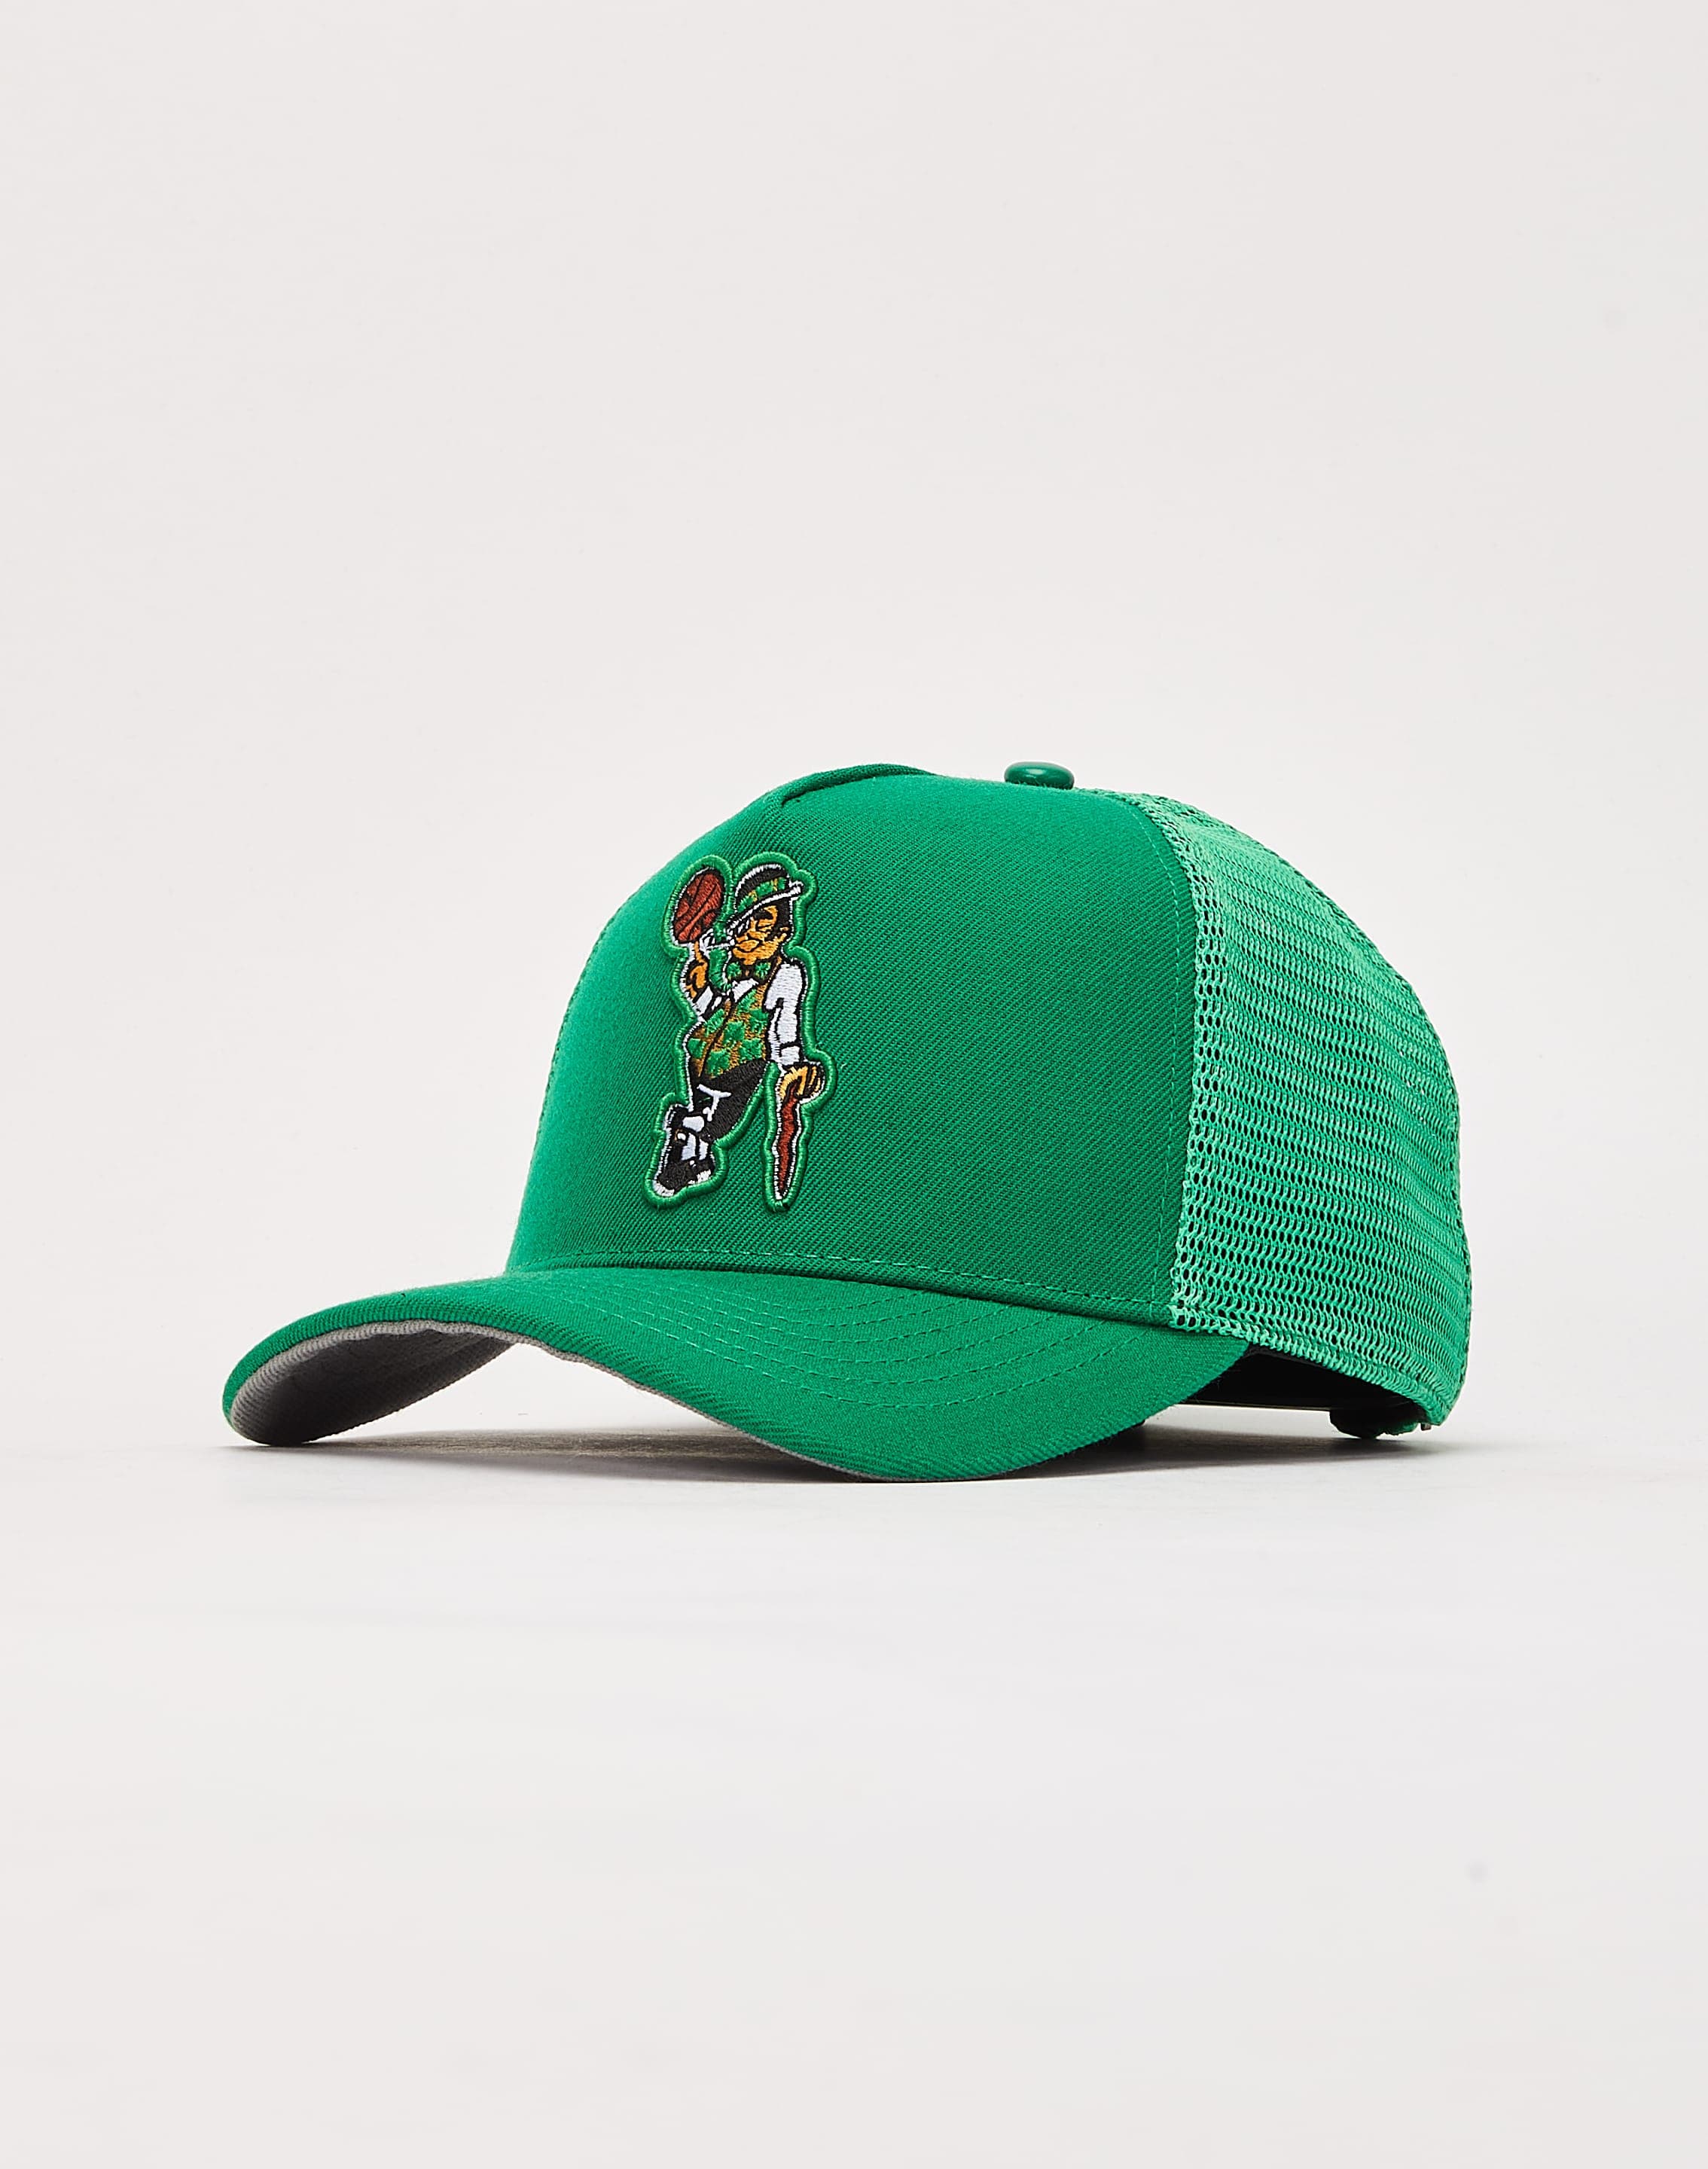 boston celtics trucker hat